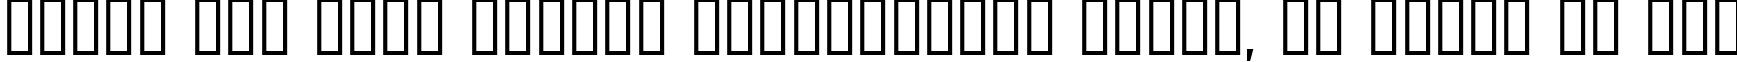 Пример написания шрифтом Ventilate AOE текста на русском